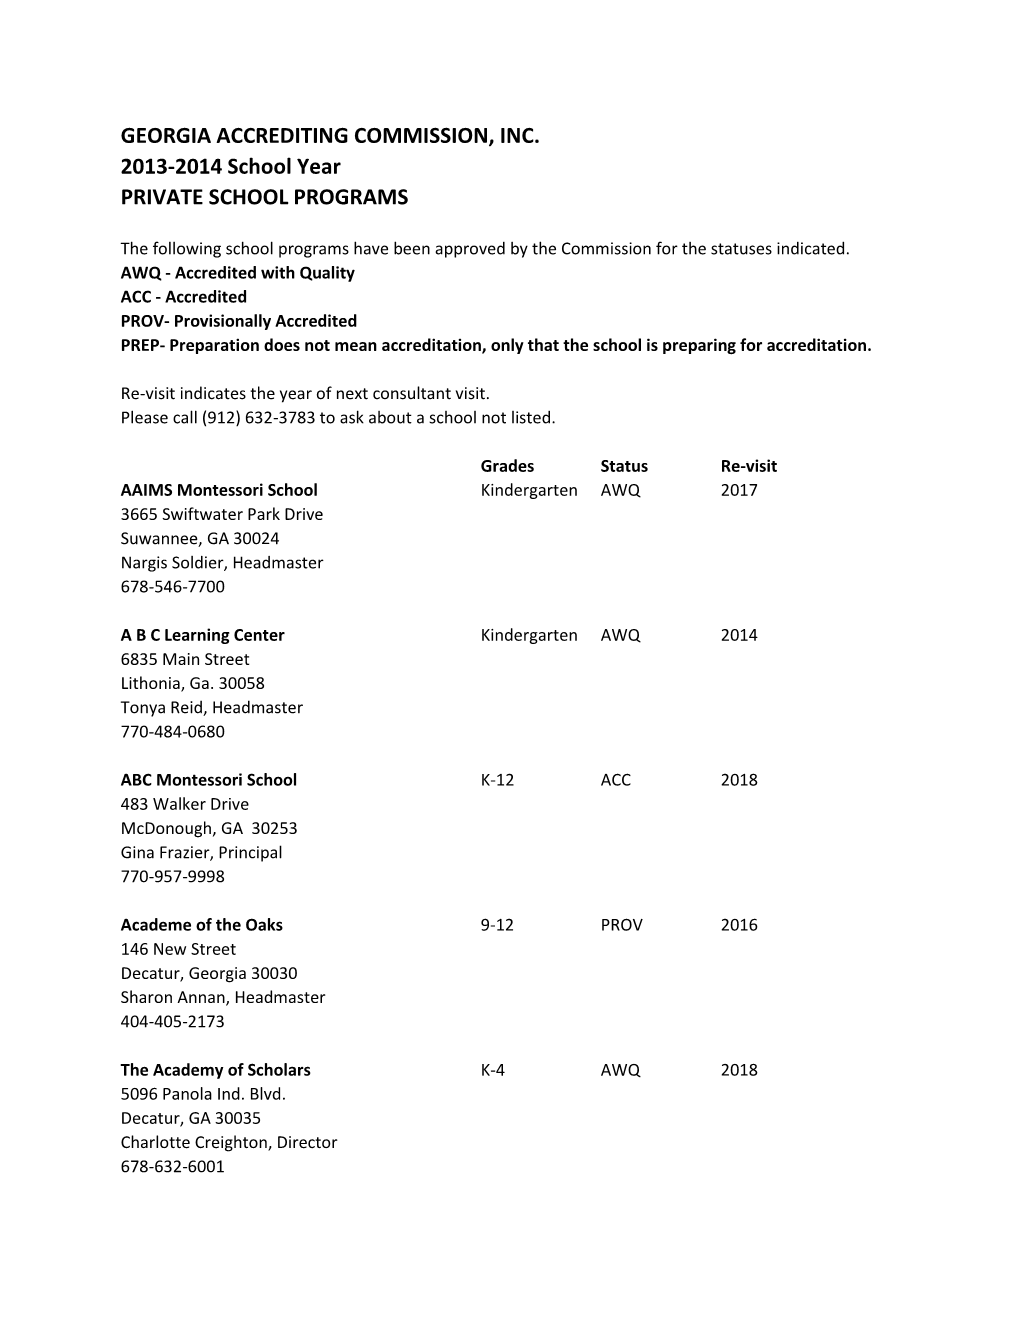 GEORGIA ACCREDITING COMMISSION, INC. 2013-2014 School Year PRIVATE SCHOOL PROGRAMS